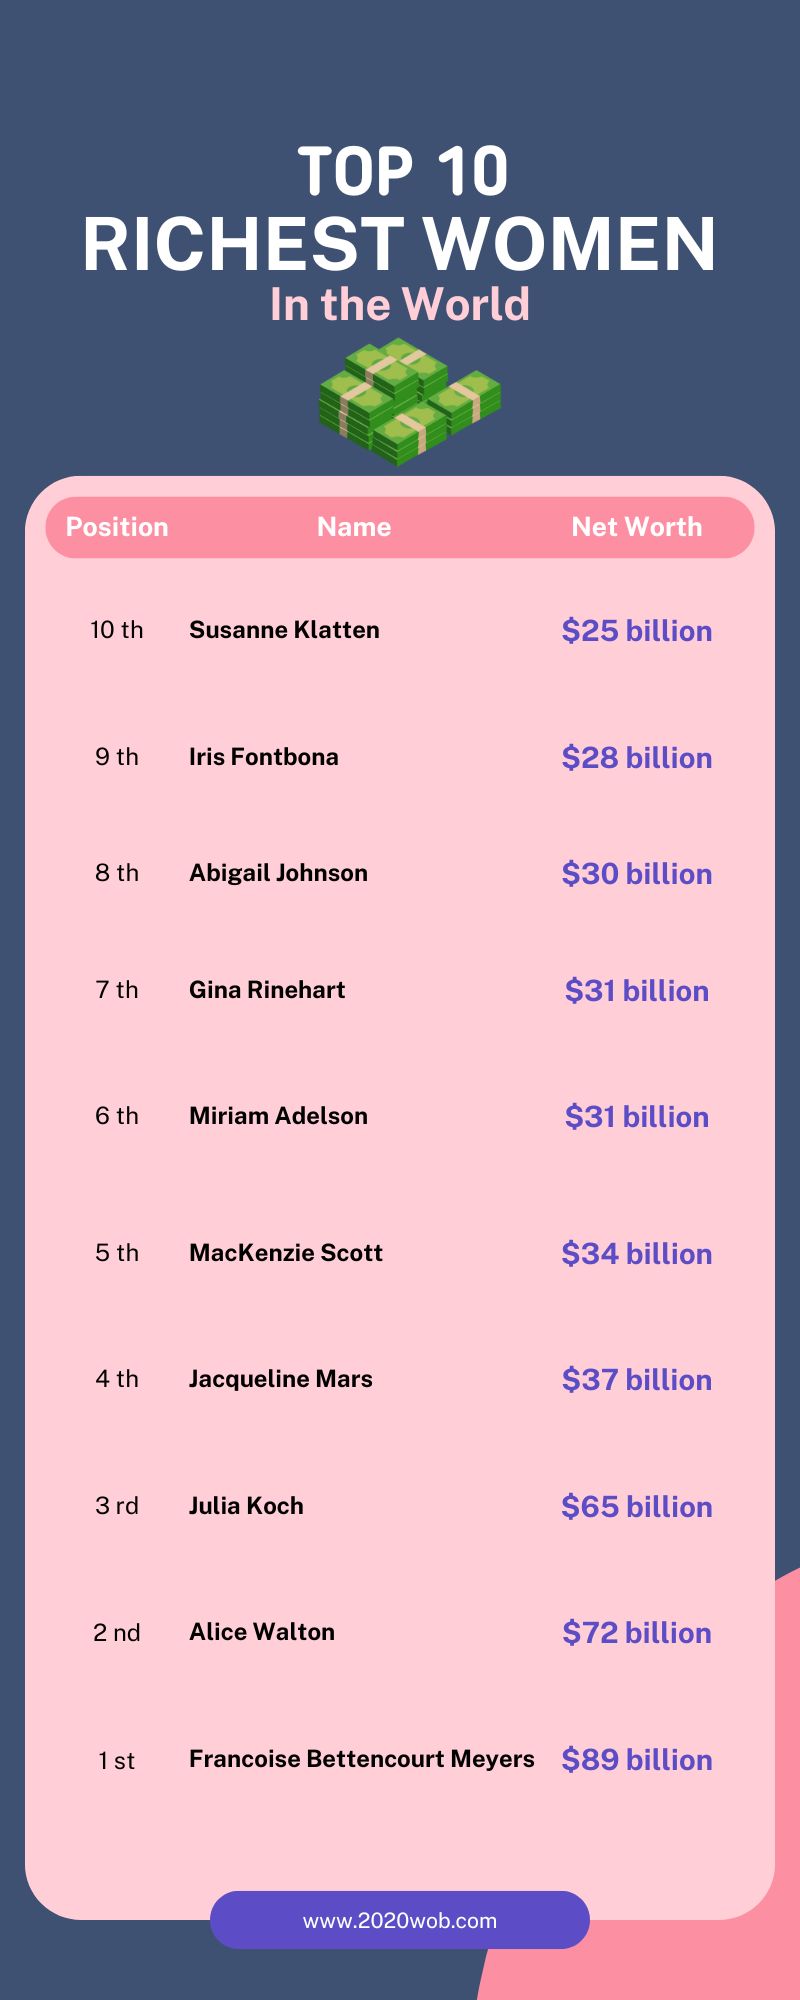 Richest Women in the World Top 10